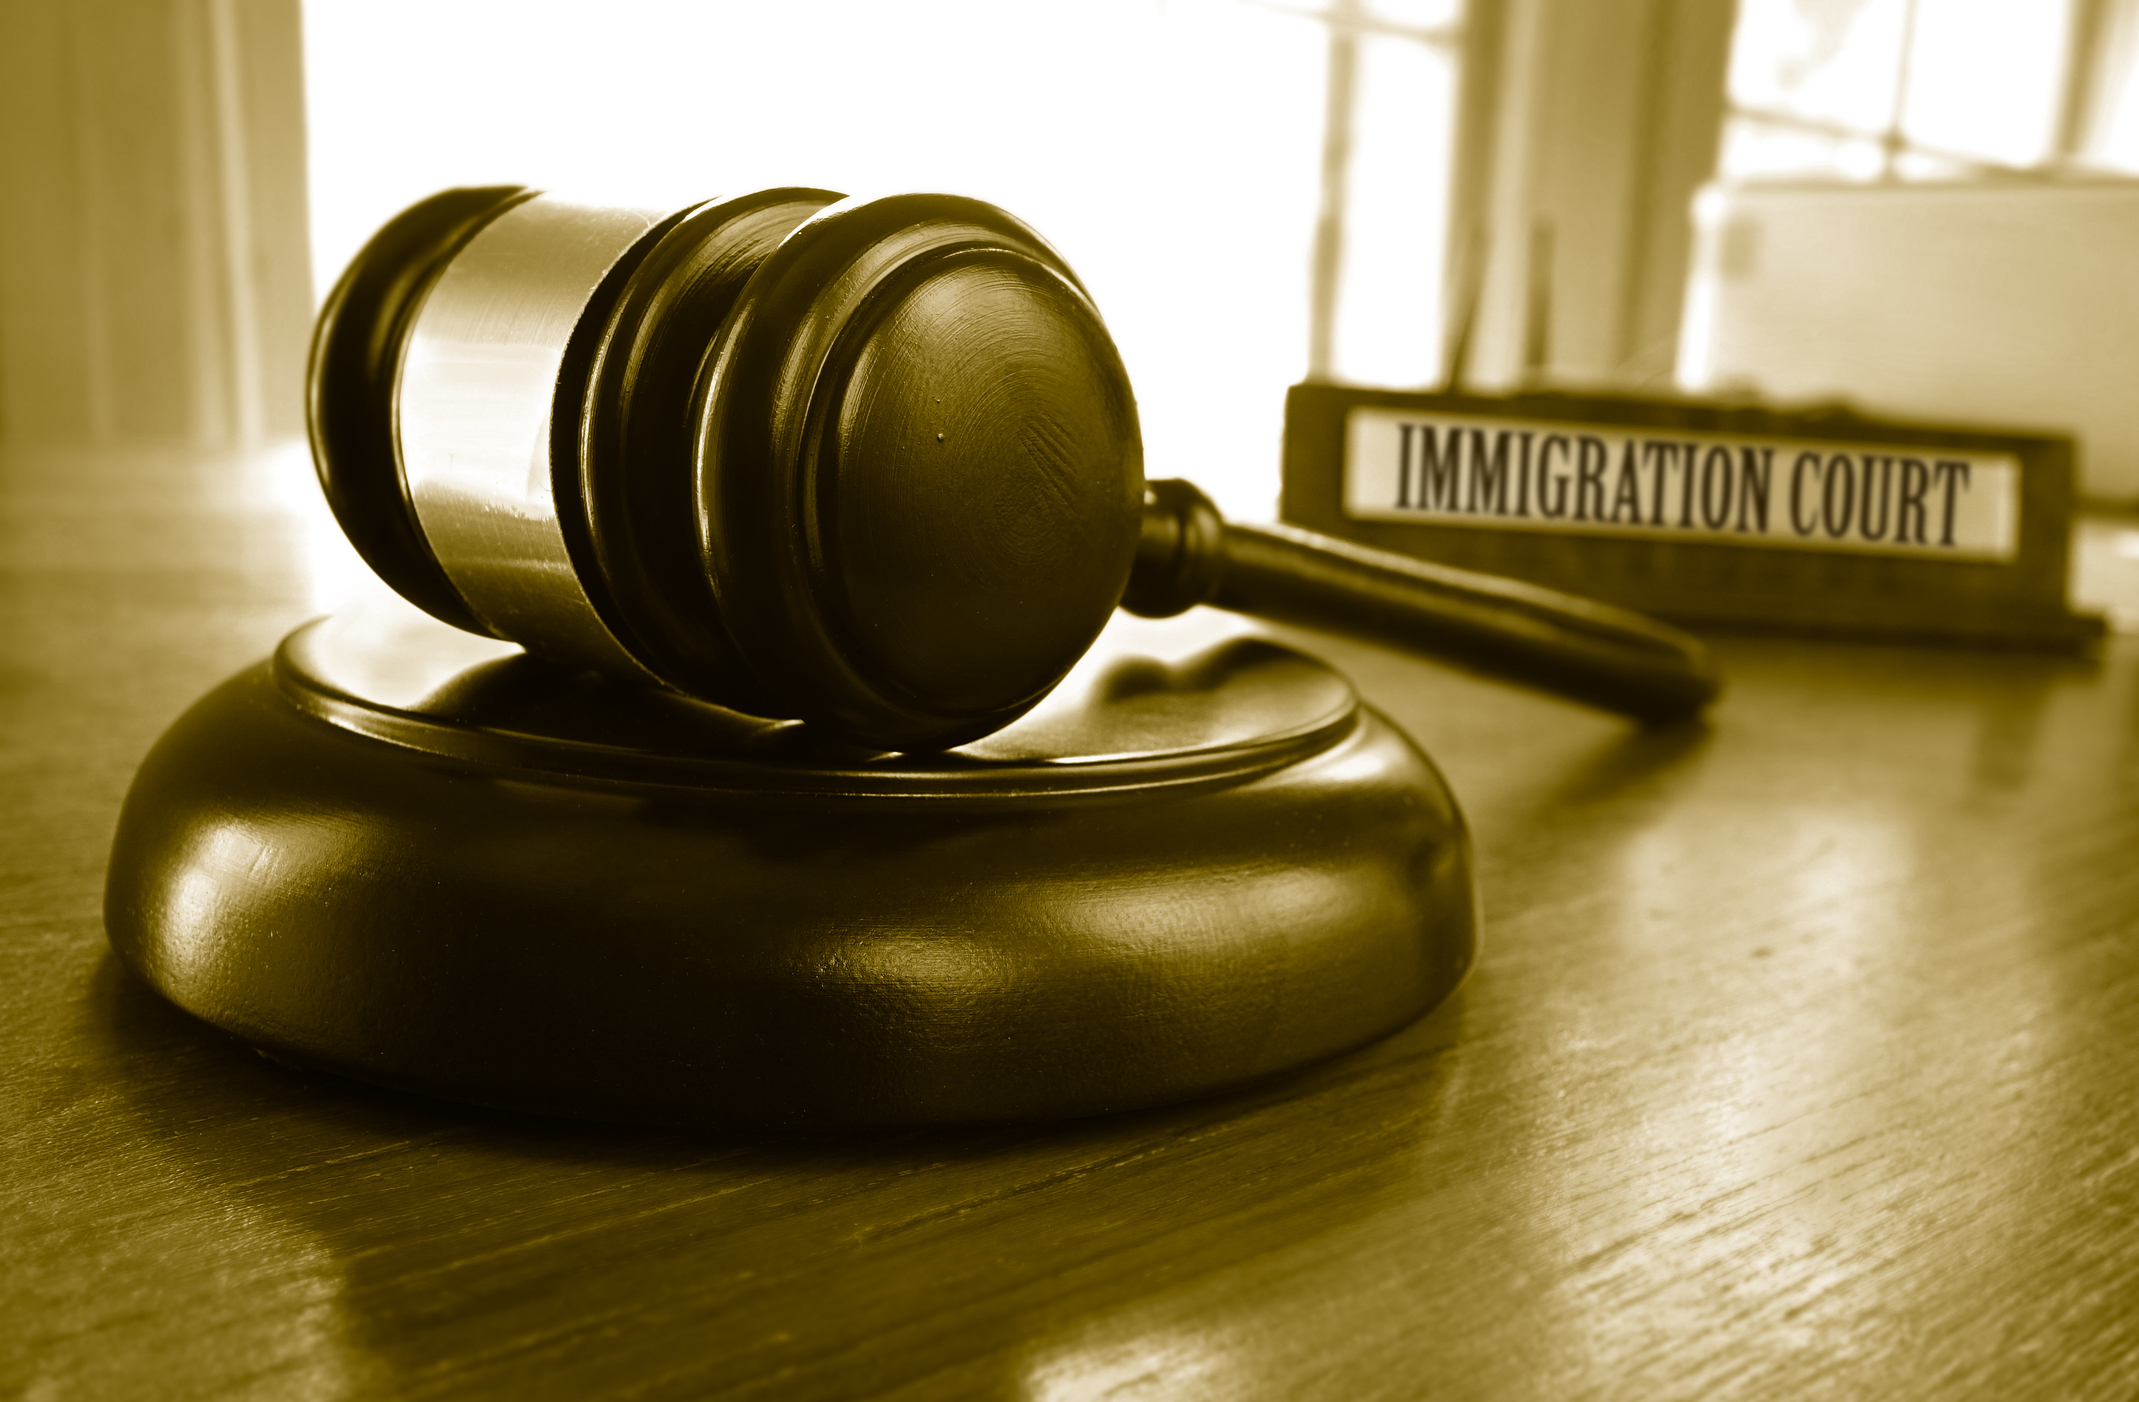 Mt. Pleasant, Pennsylvania: Massage Parlor Owner Faces Deportation after Human Trafficking Plea